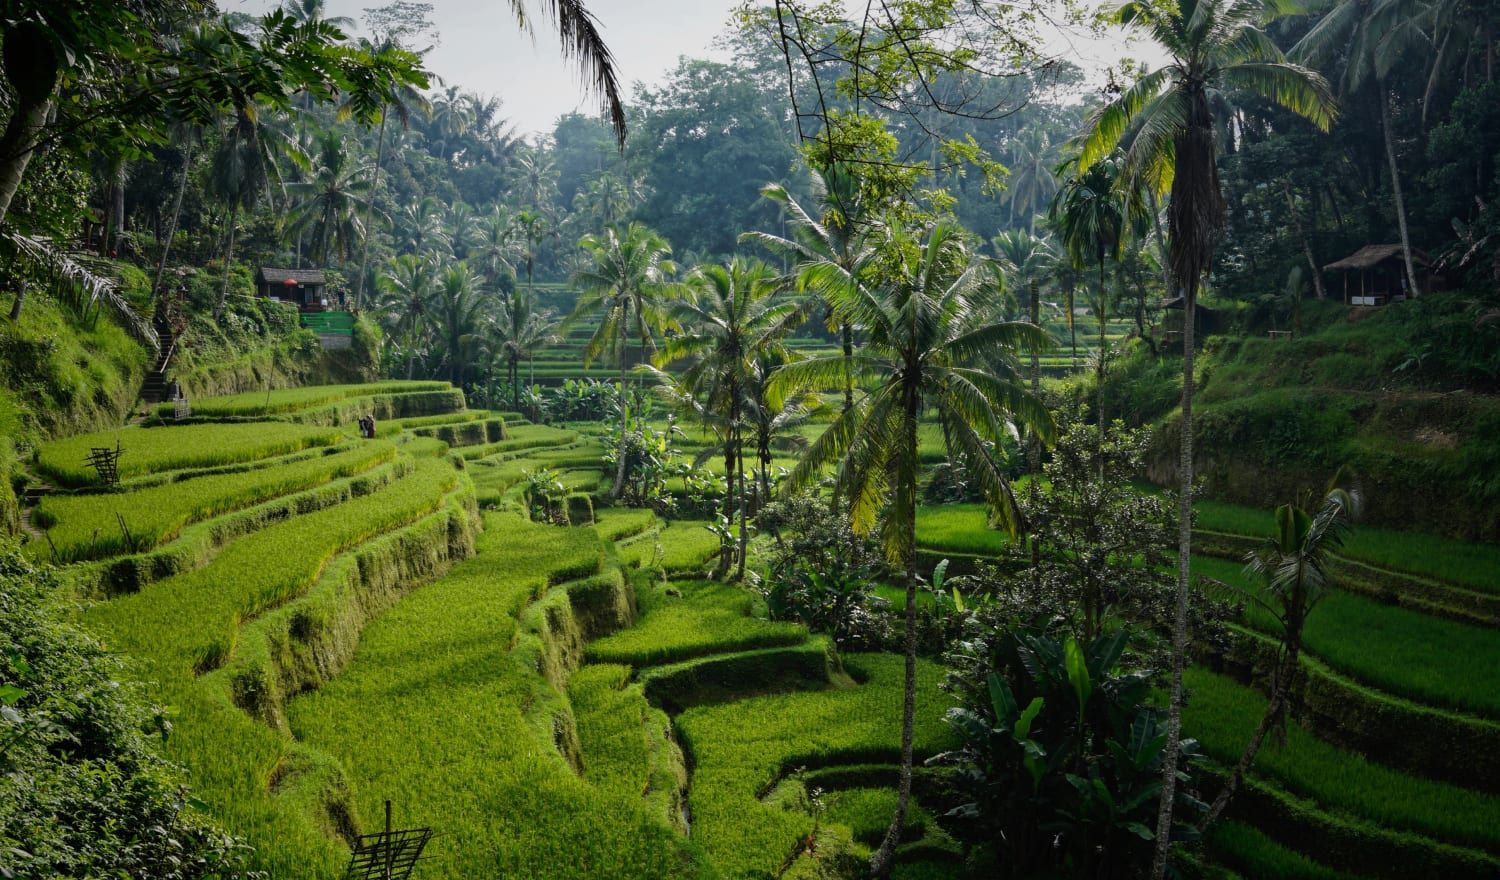 An idyllic green rice field deep in the jungle